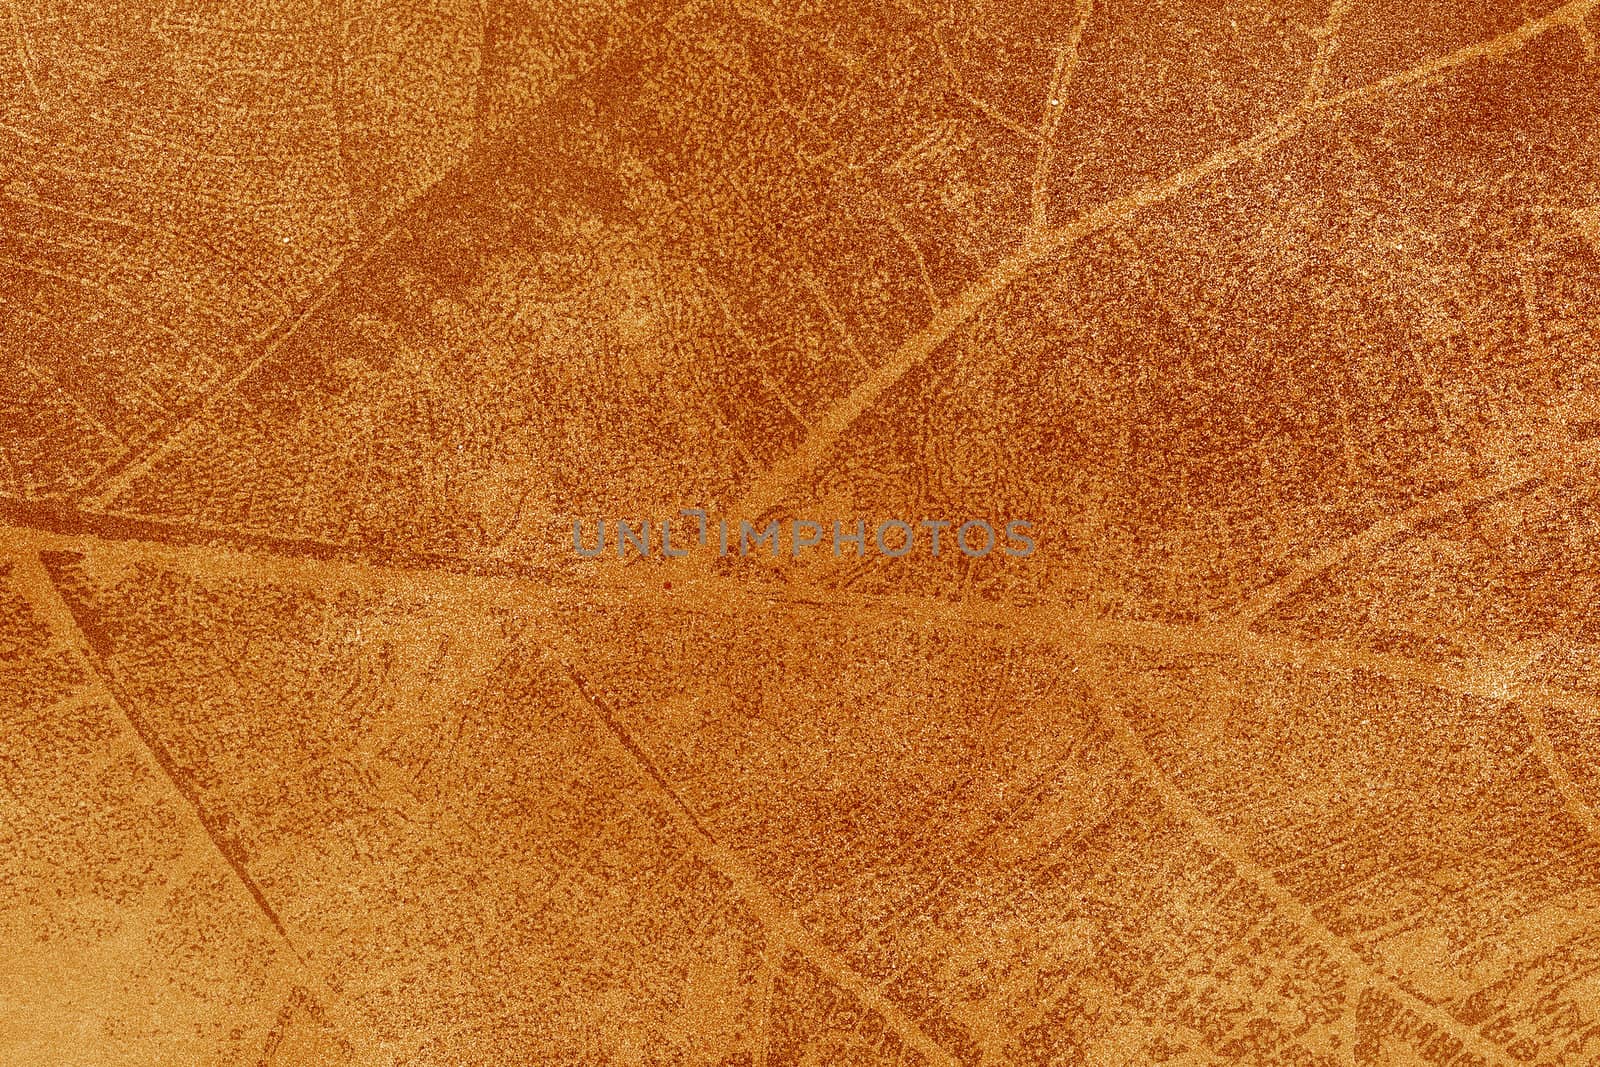 Dry leaf textured on grunge background by jakgree